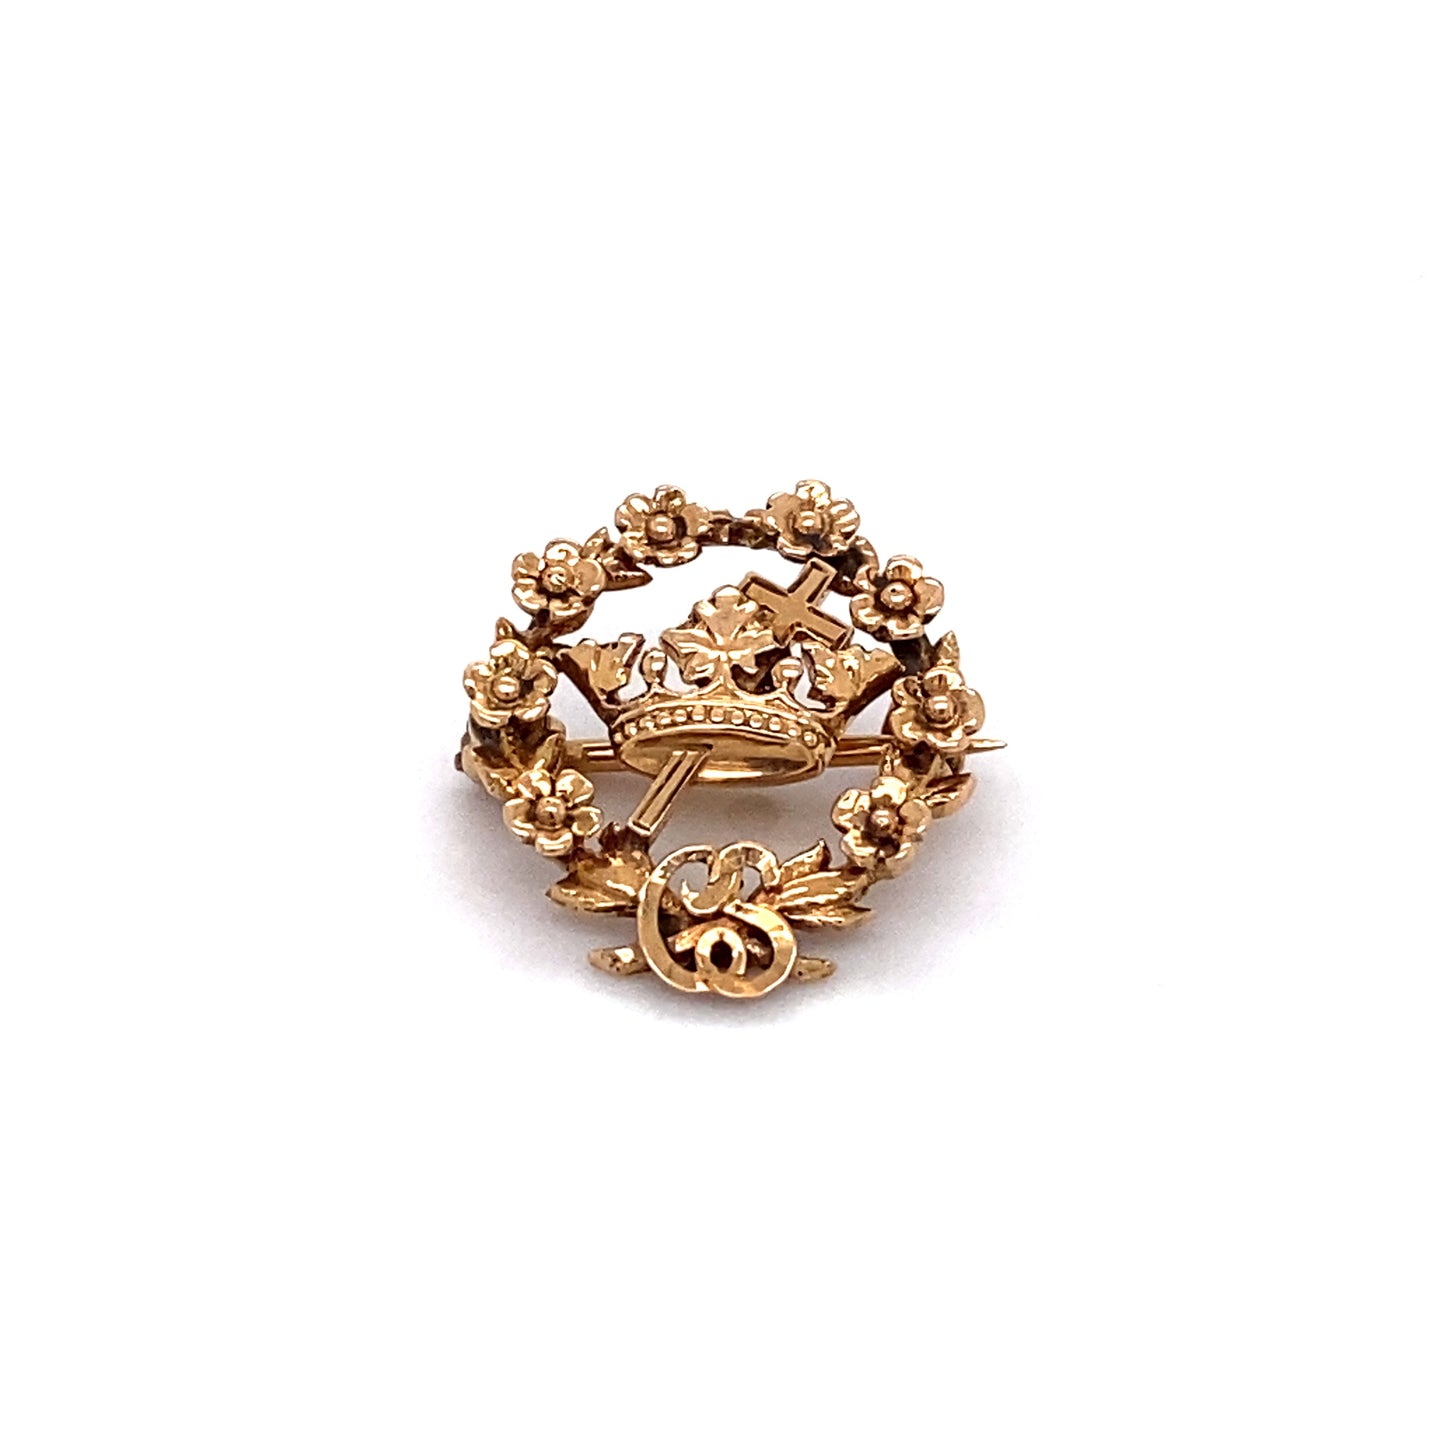 Circa 1900 Christian Science Crown & Cross Pin in 14K Gold